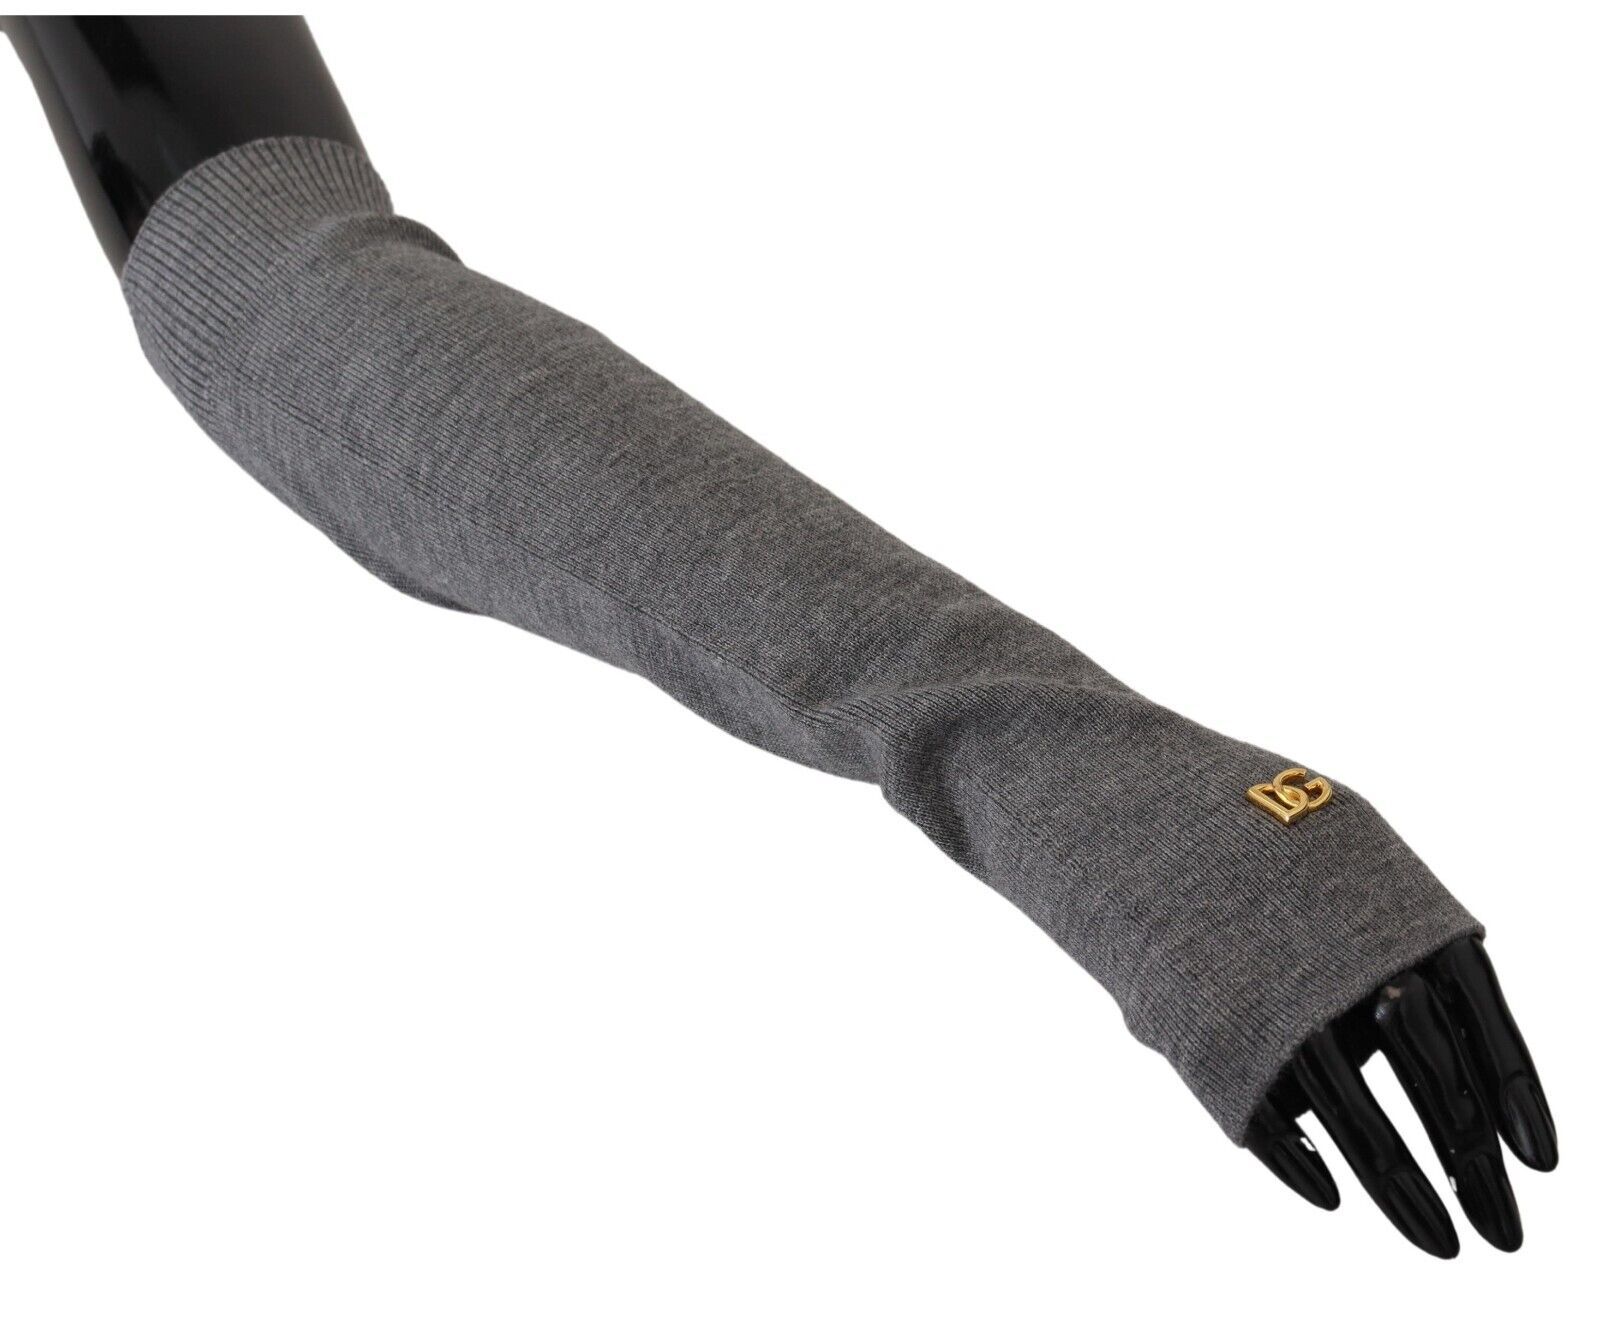 Gray Fingerless Elbow Length Wool Knit Gloves